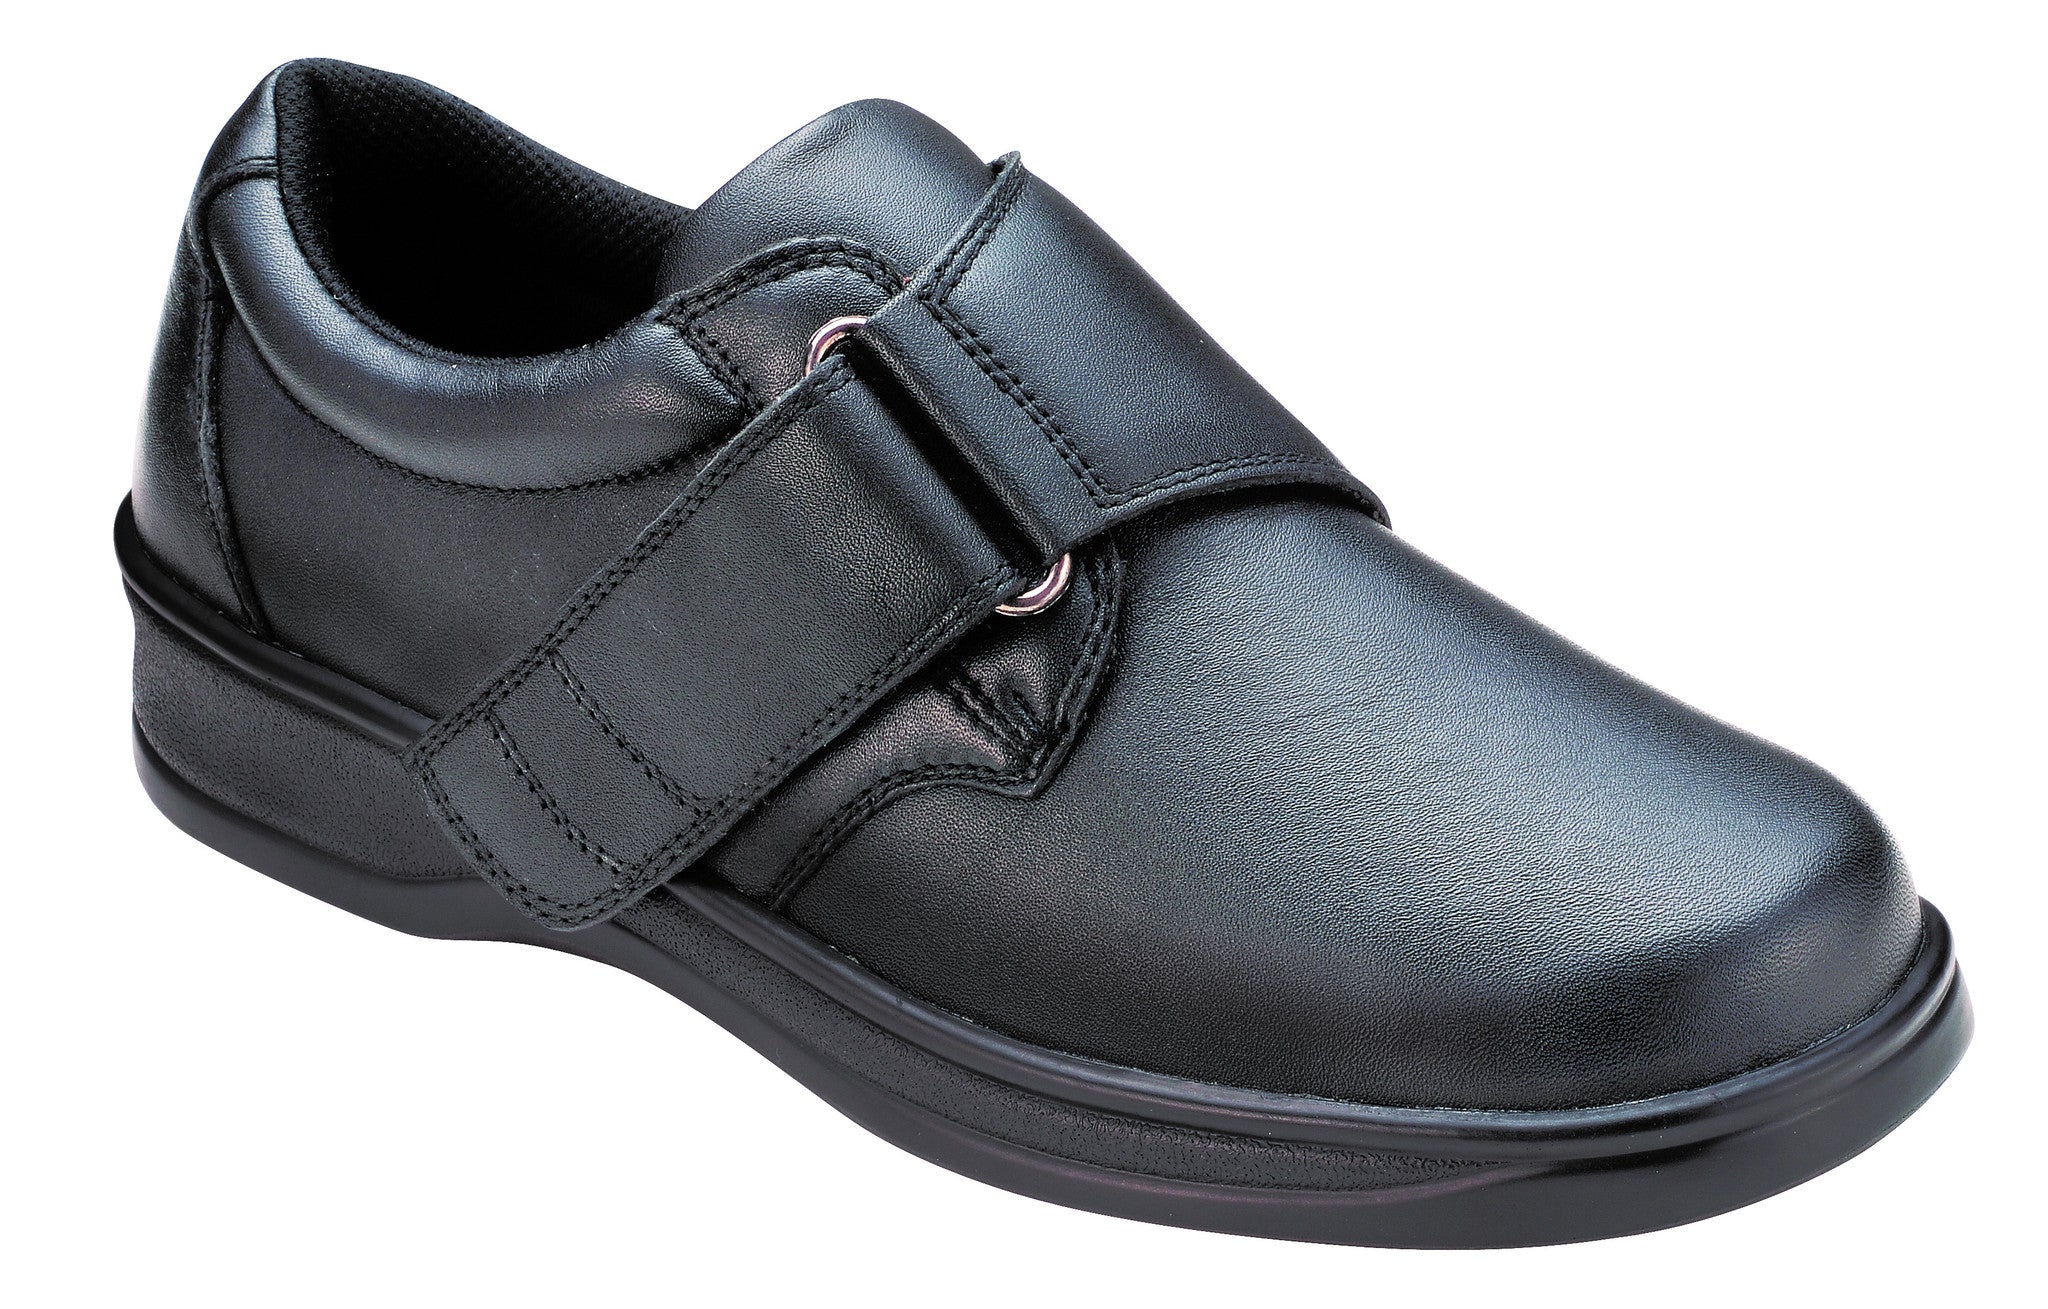 Orthofeet 810 Acadia Women's Comfort Shoe Black | Diabetic Shoes ...